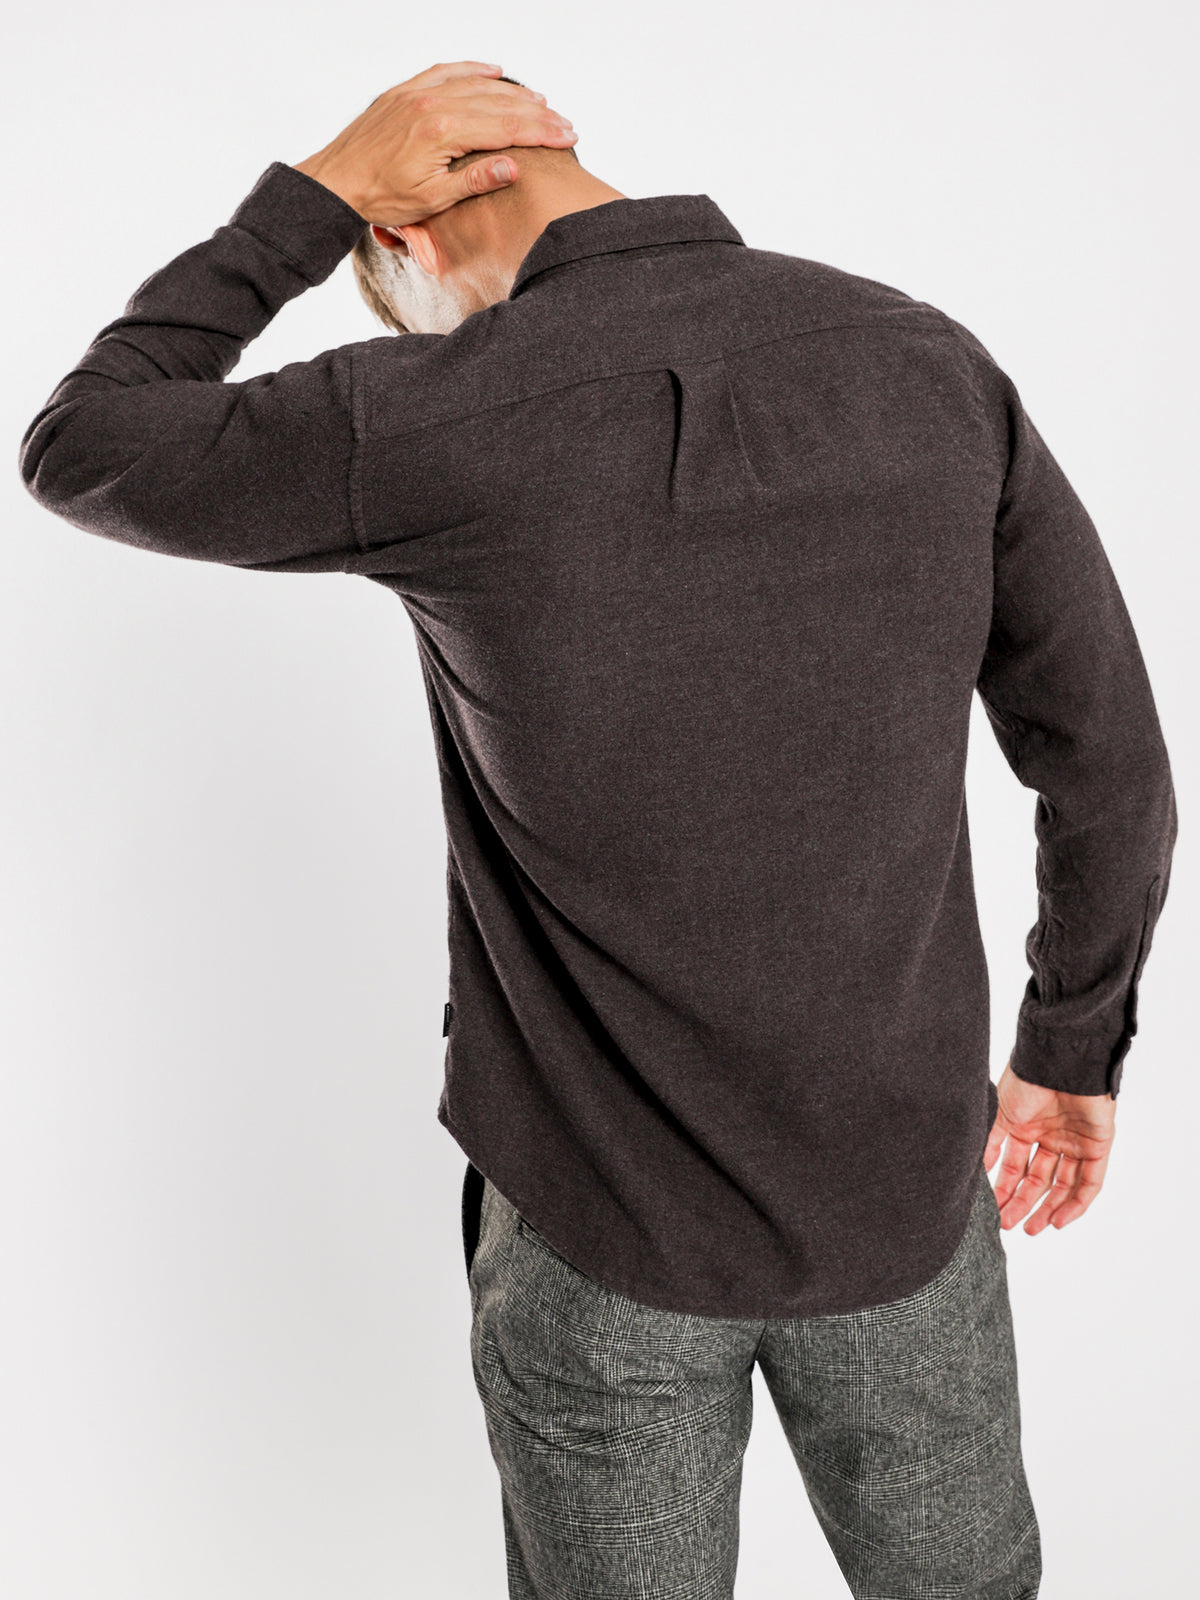 Ryker Flannel Long Sleeve Shirt in Charcoal